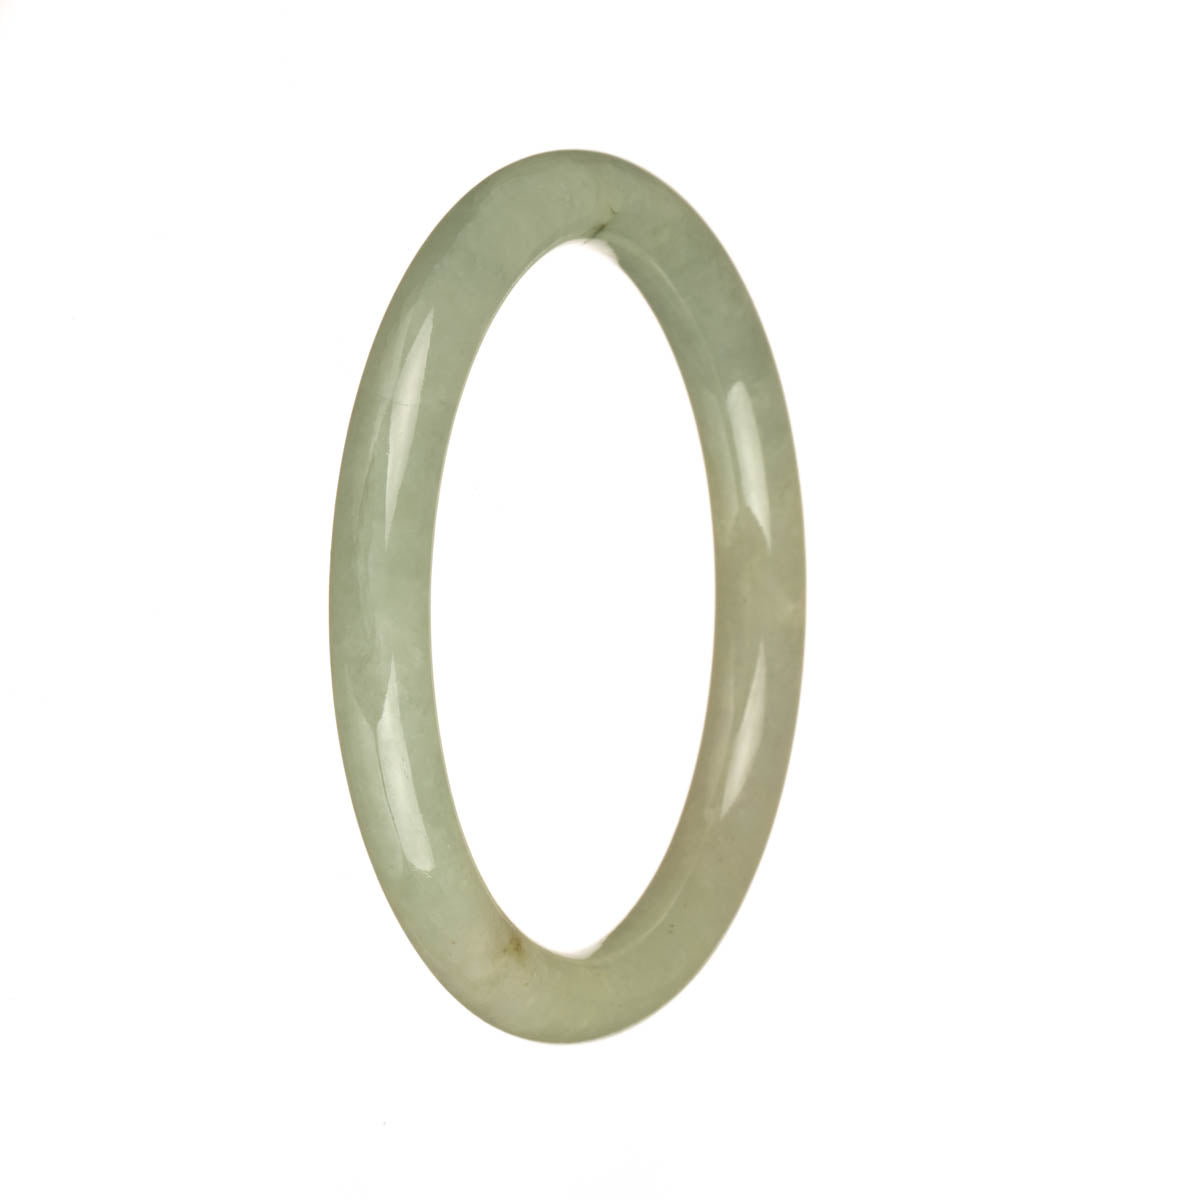 Real Grade A Pale Green Jade Bangle Bracelet - 55mm Petite Round